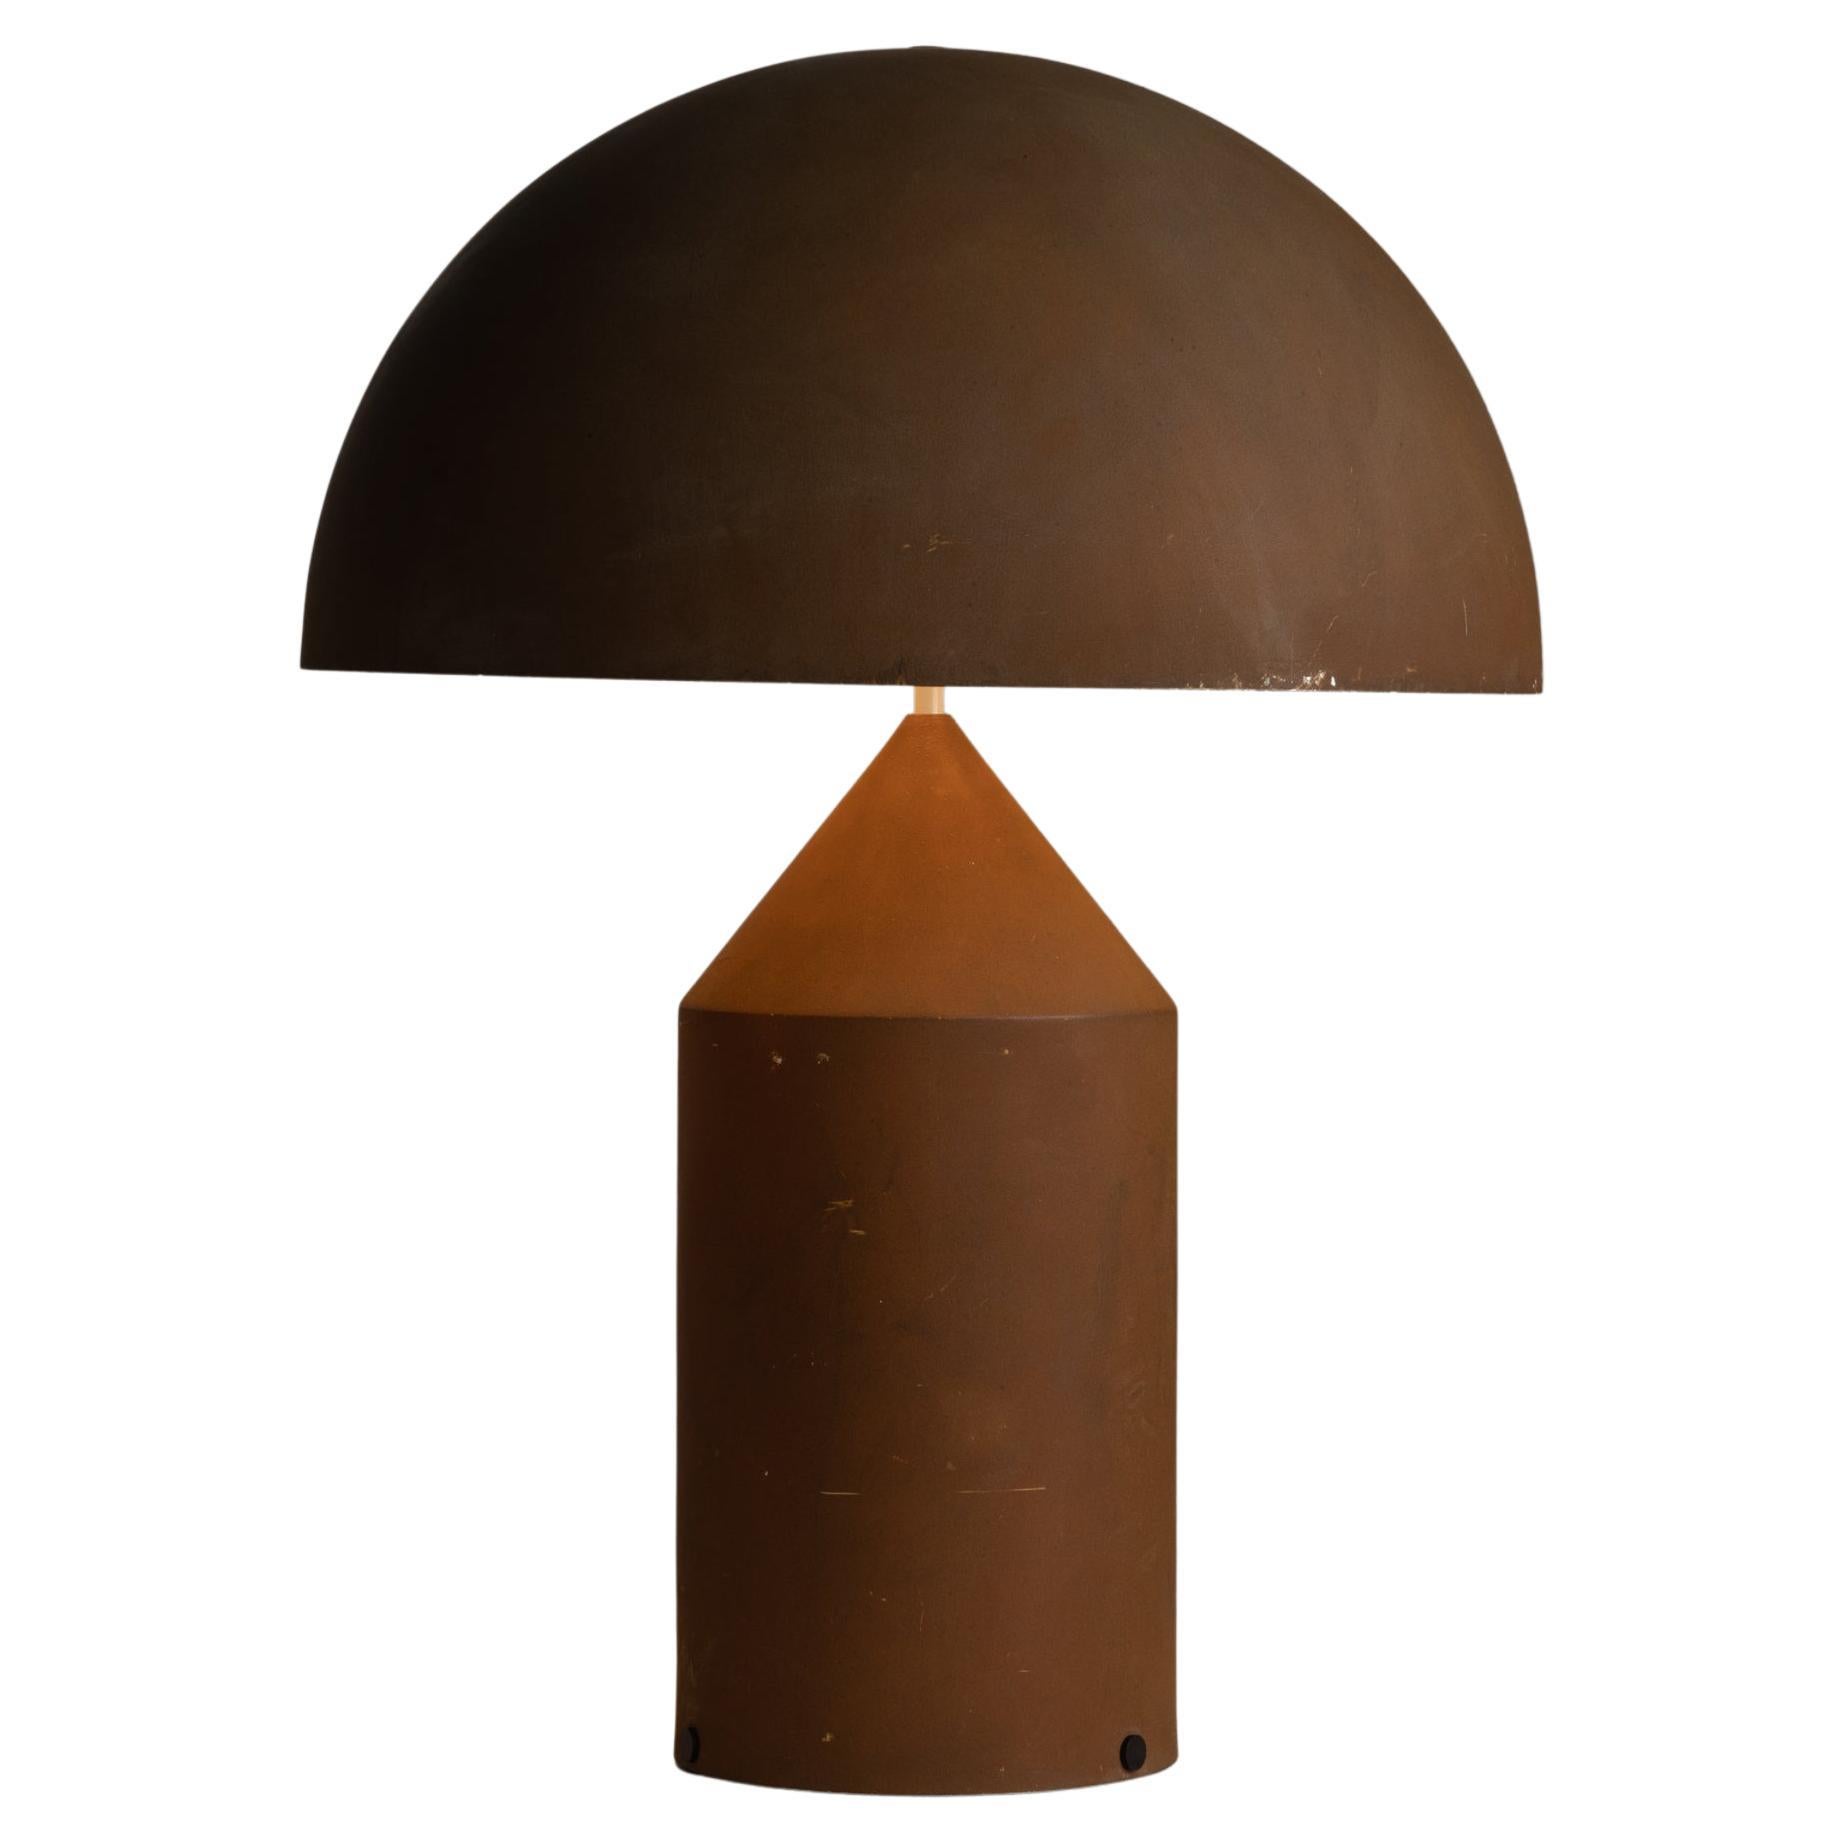 Atollo 239 Table Lamp by Vico Magistretti for Oluce